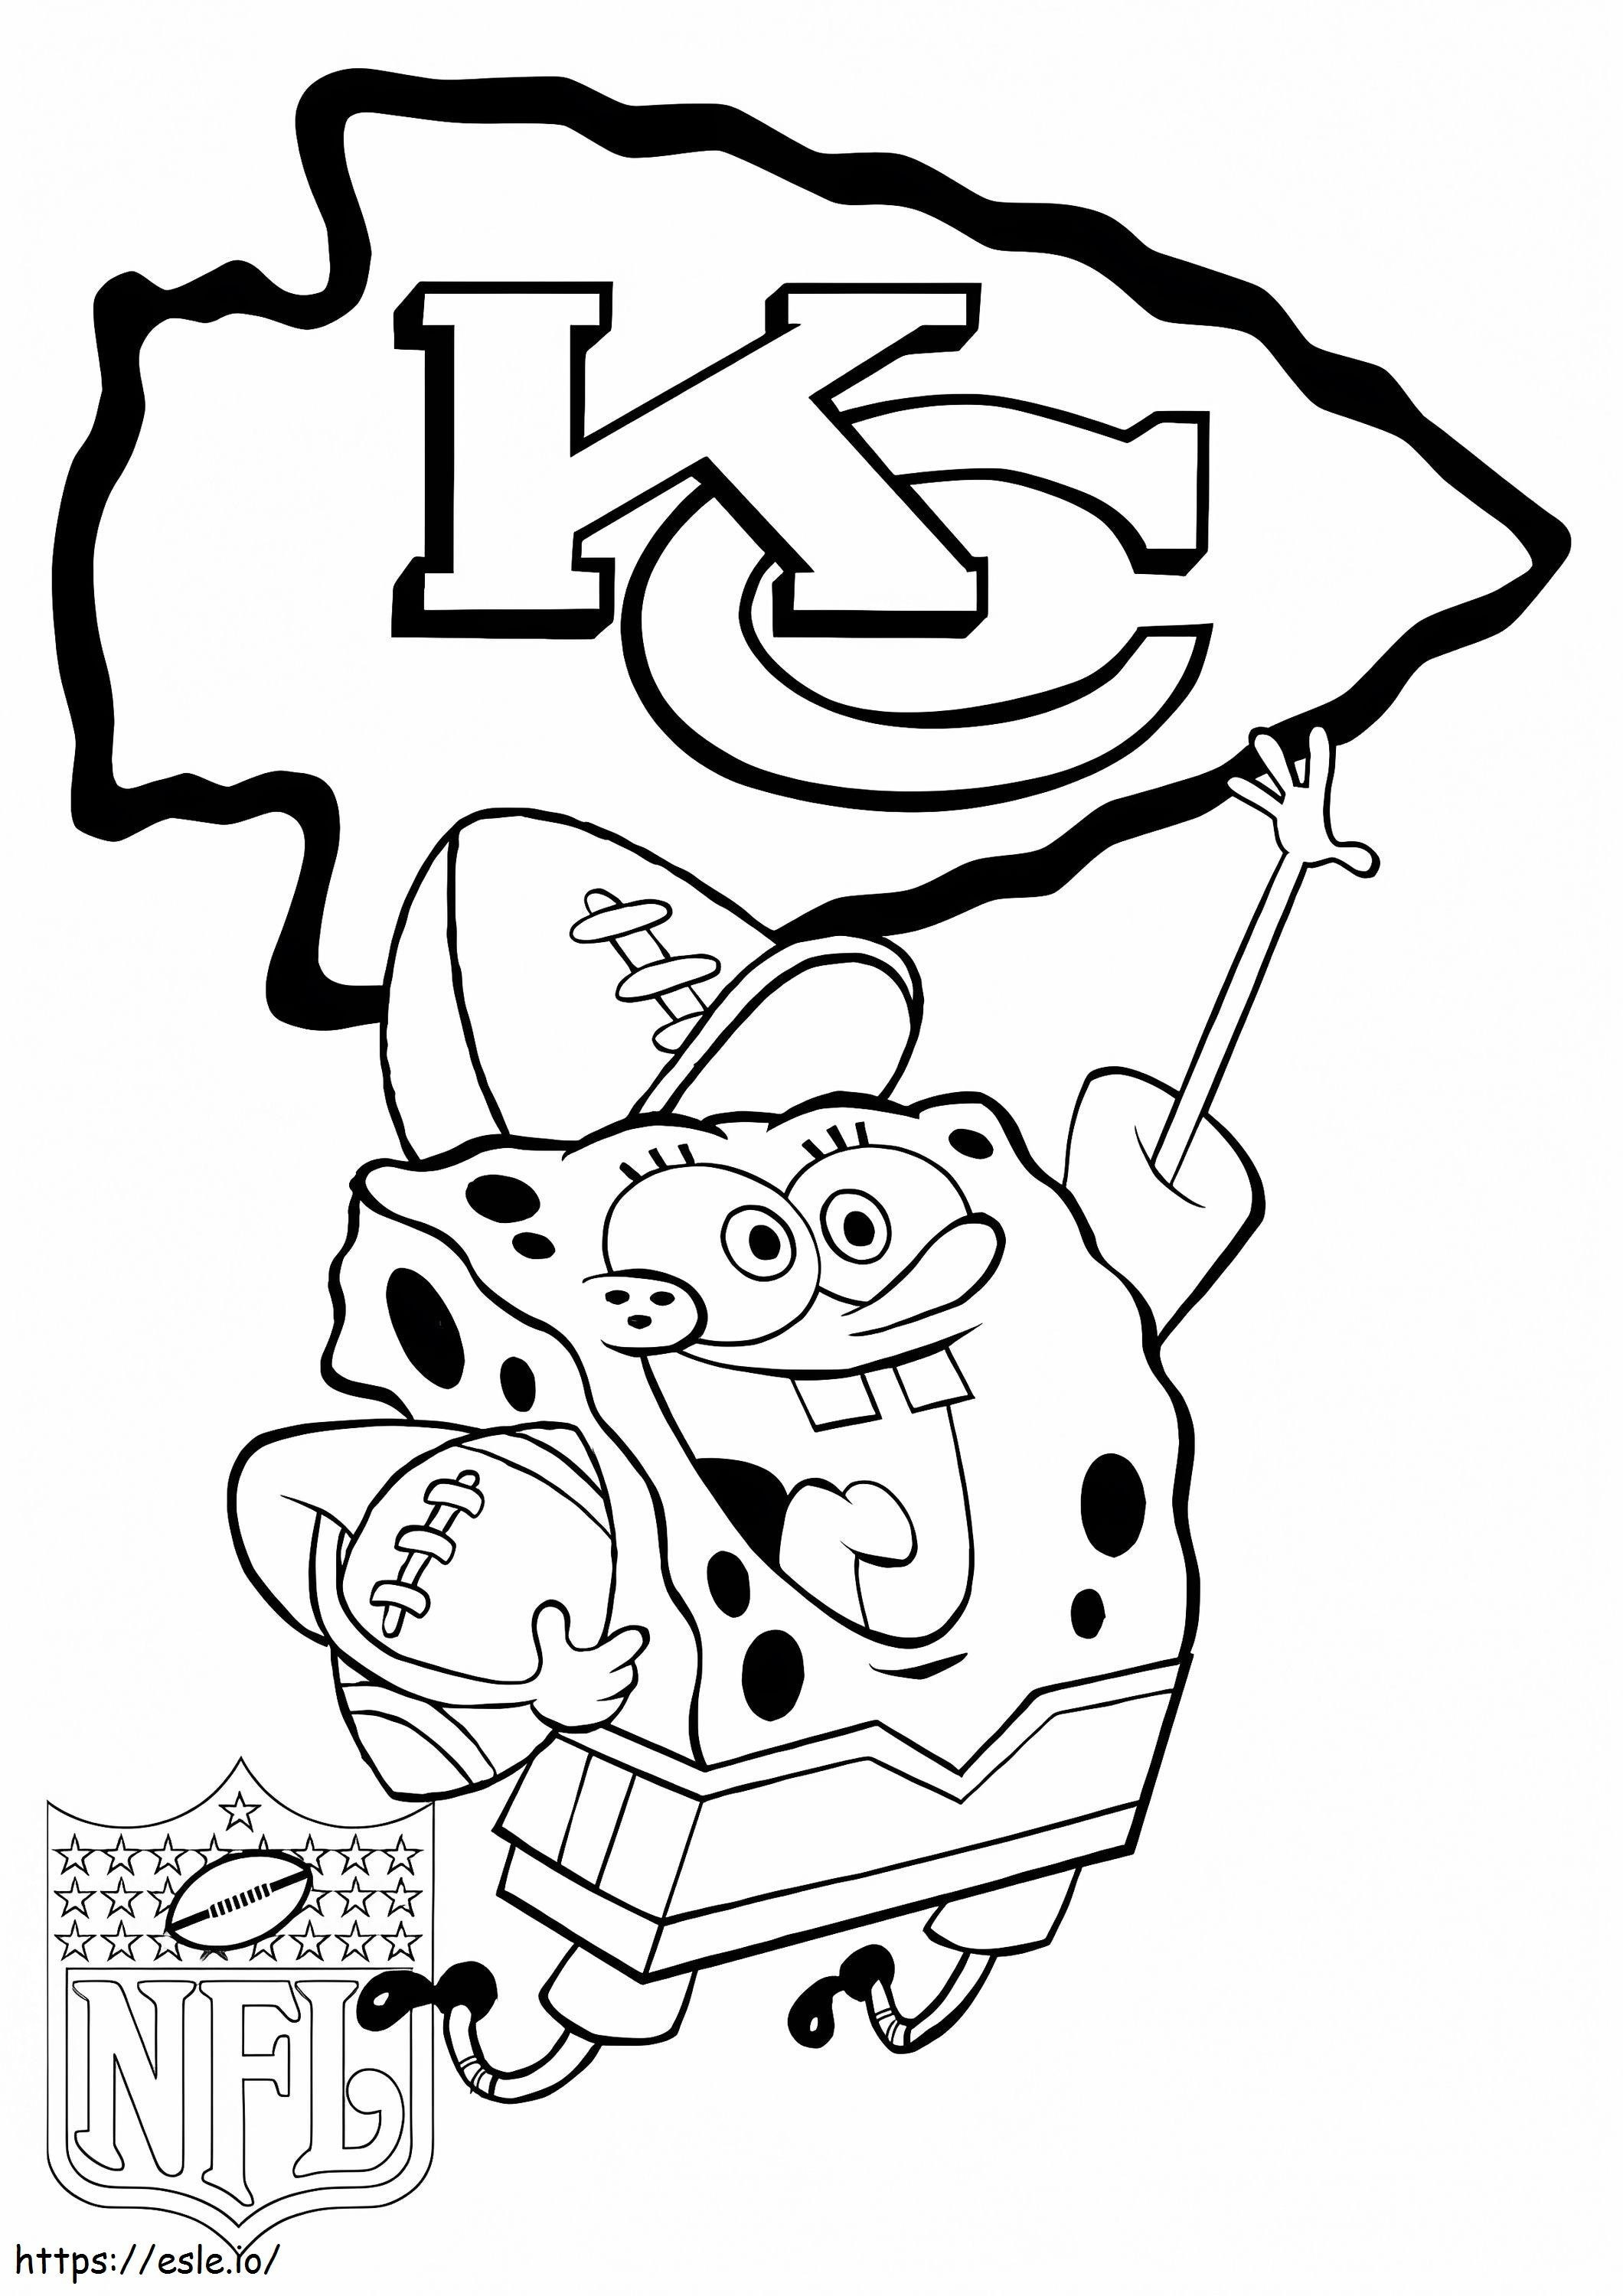 Kansas City Chiefs cu SpongeBob de colorat